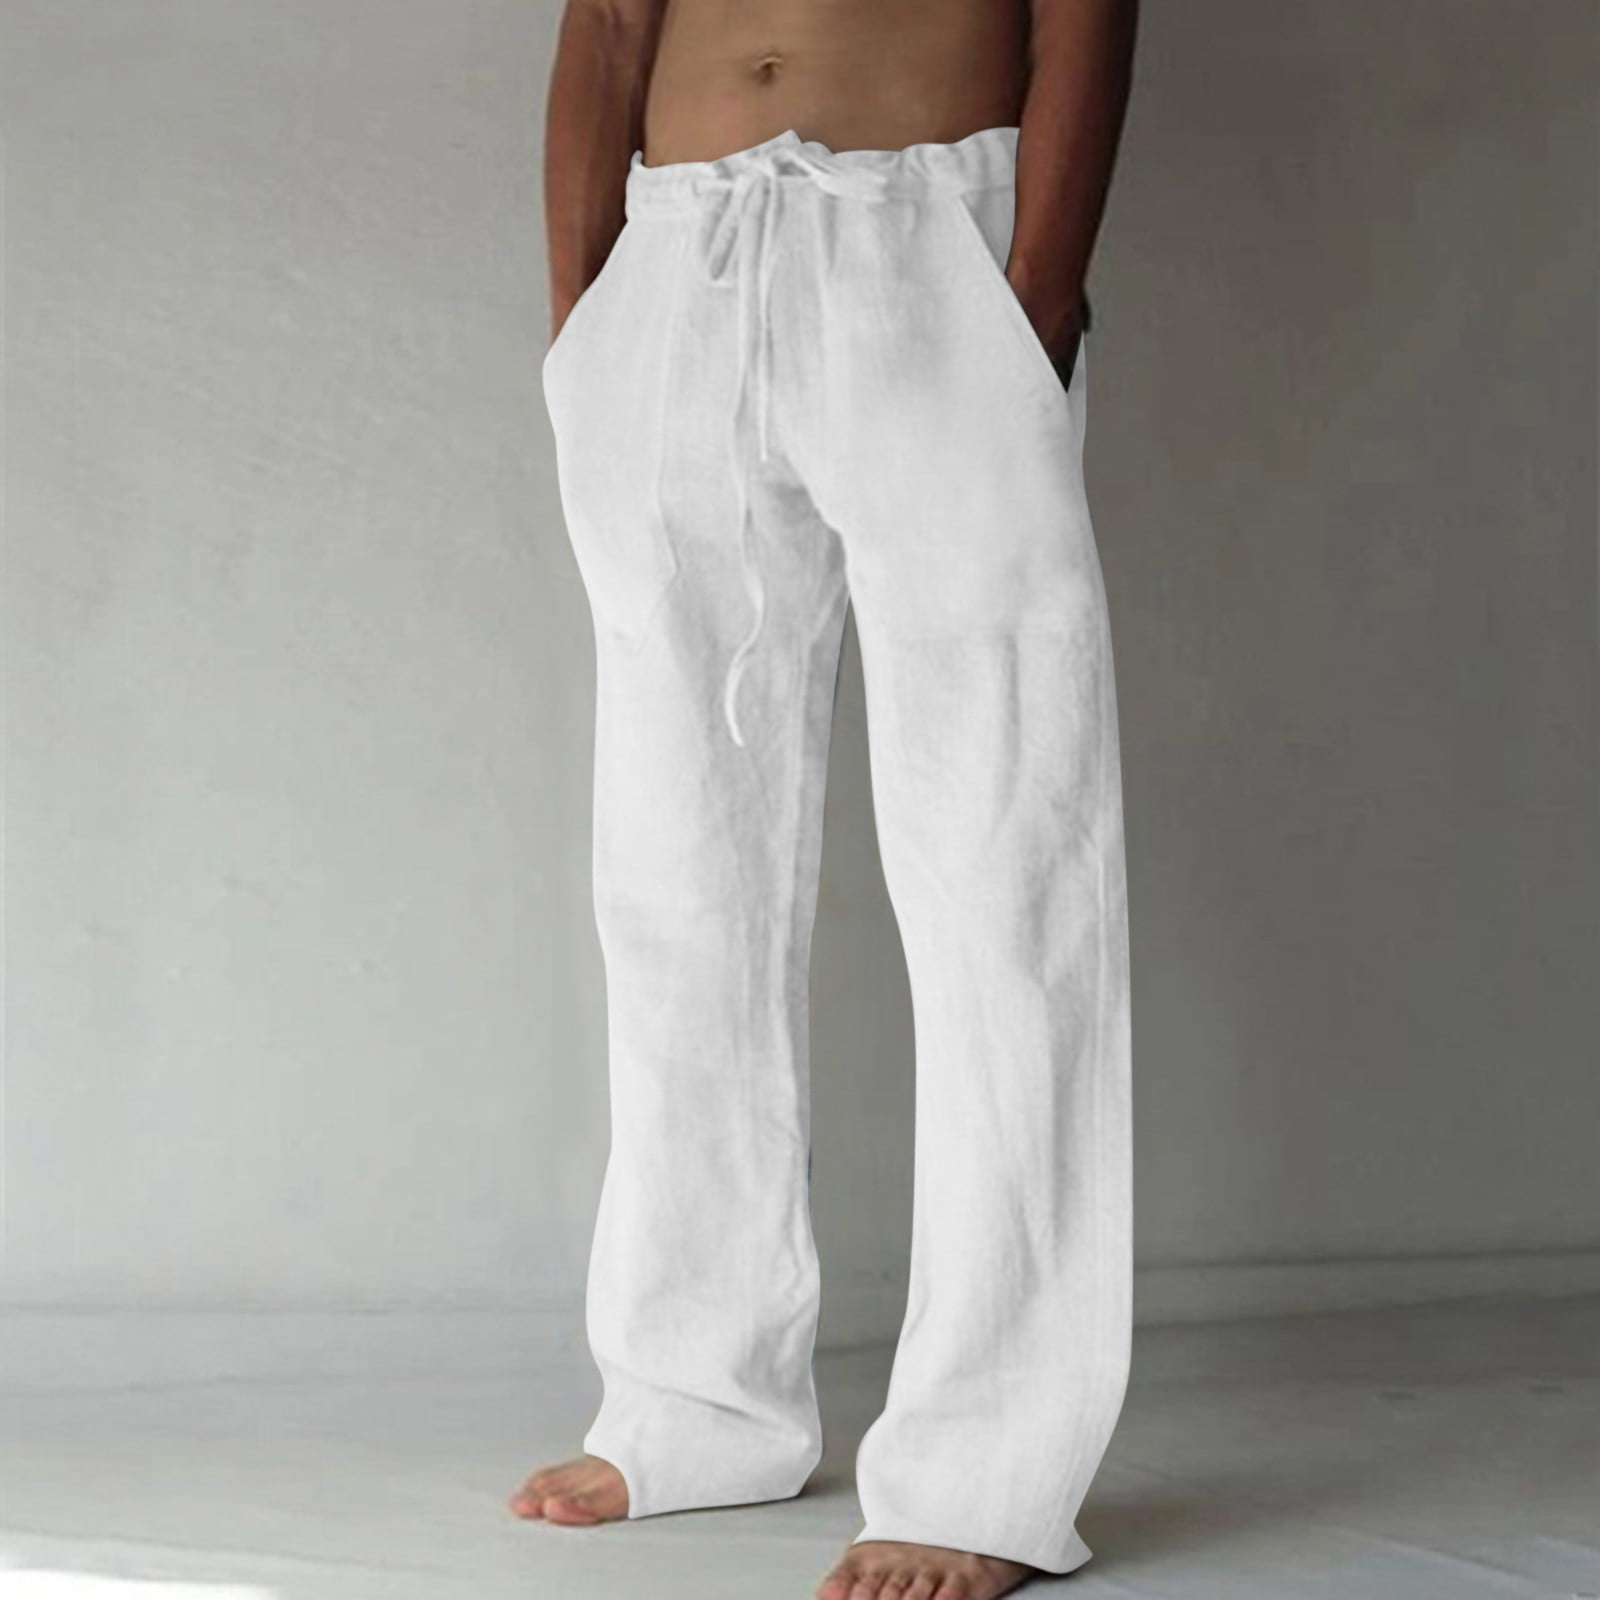 iWoo Mens Cotton Linen Drawstring Pants Elastic Waist Casual